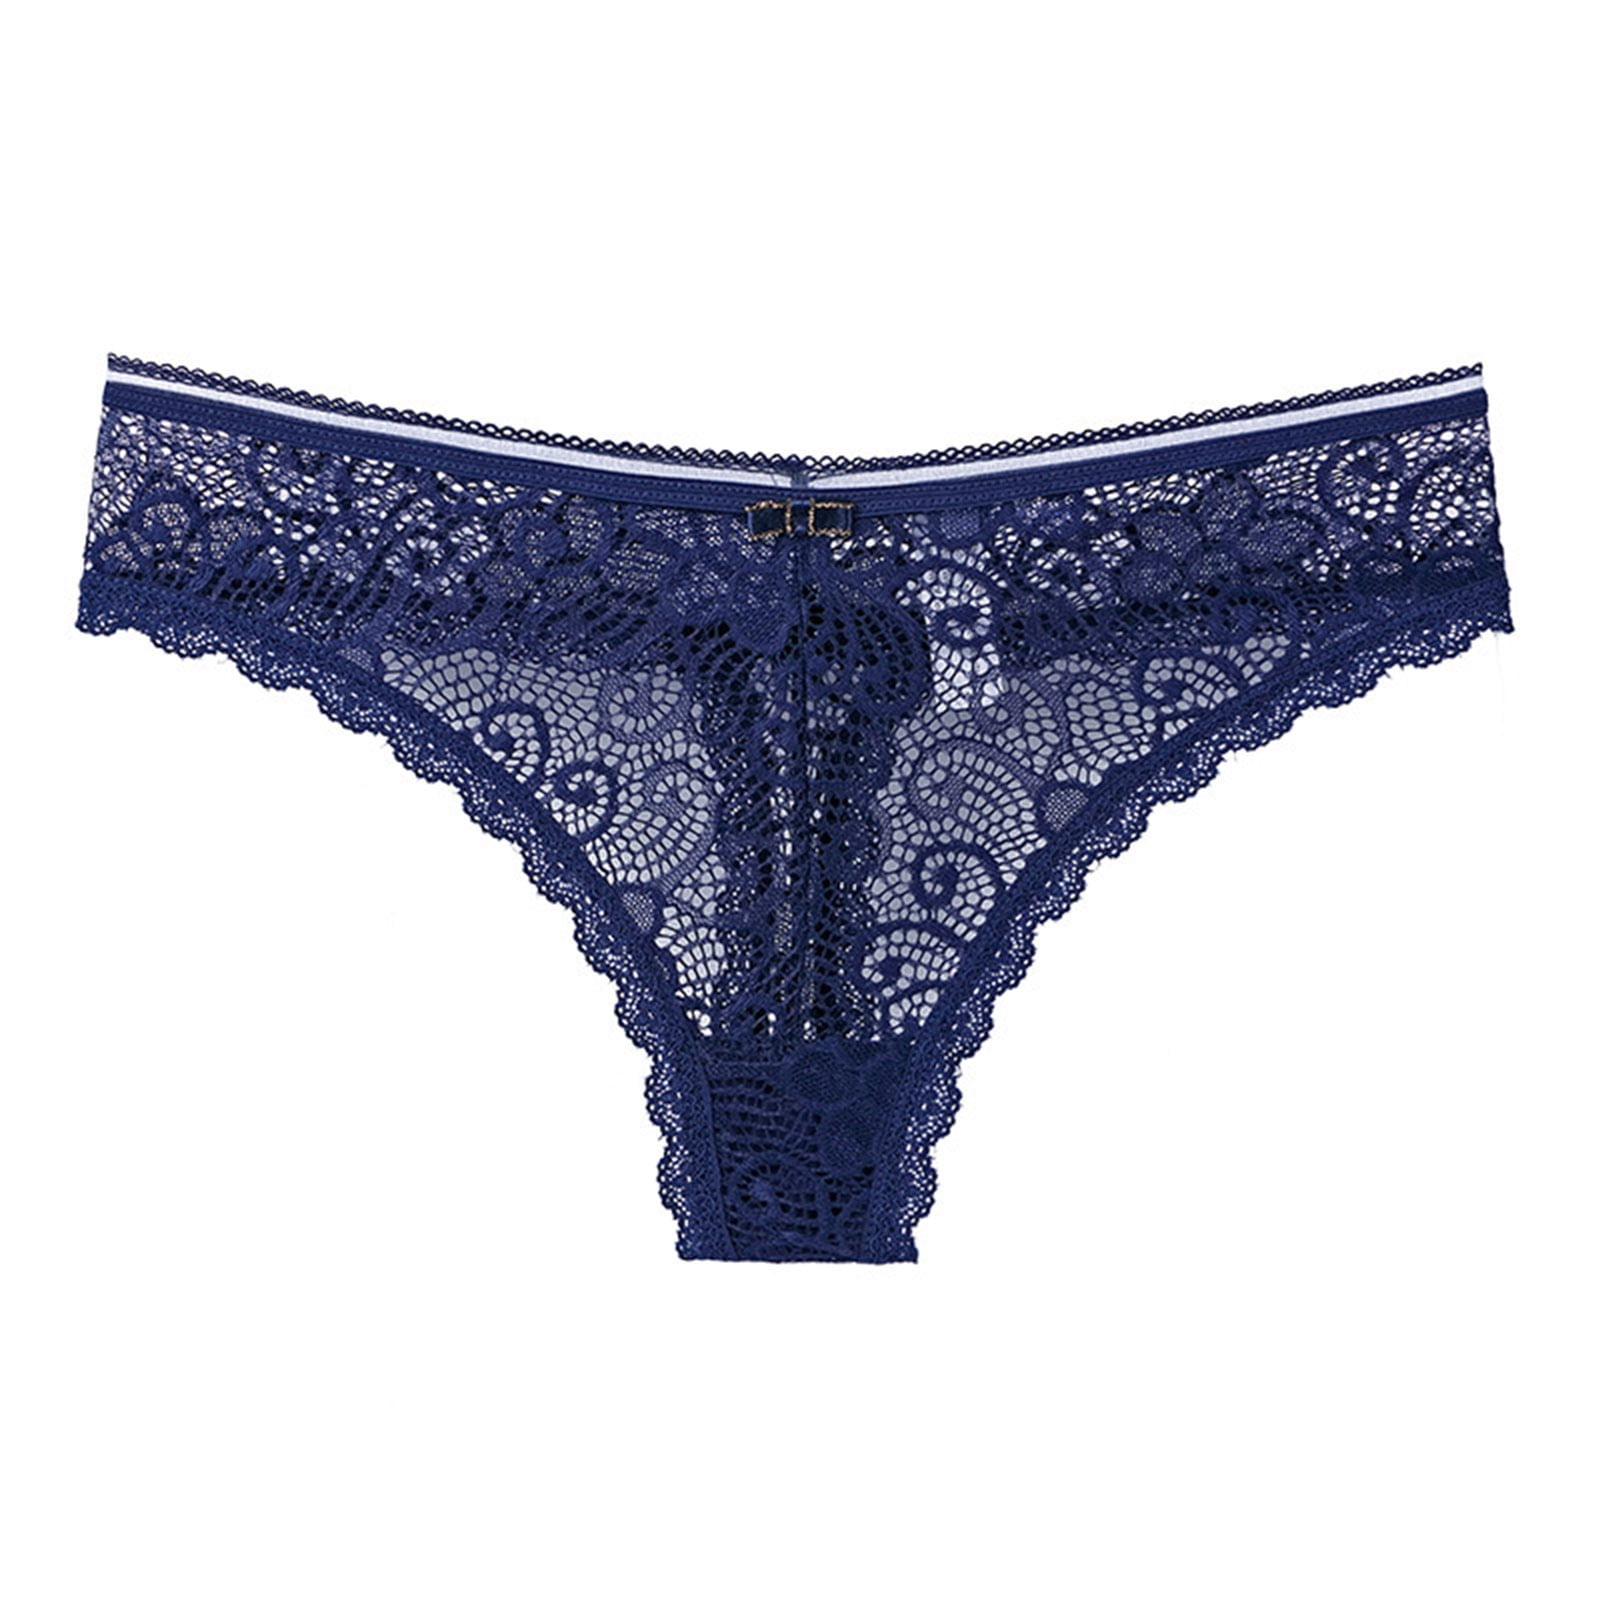 QTBIUQ Lace Women Solid Comfort Underwear Skin Friendly Briefs Panty  Intimates Thong(Dark Blue,One Size) 